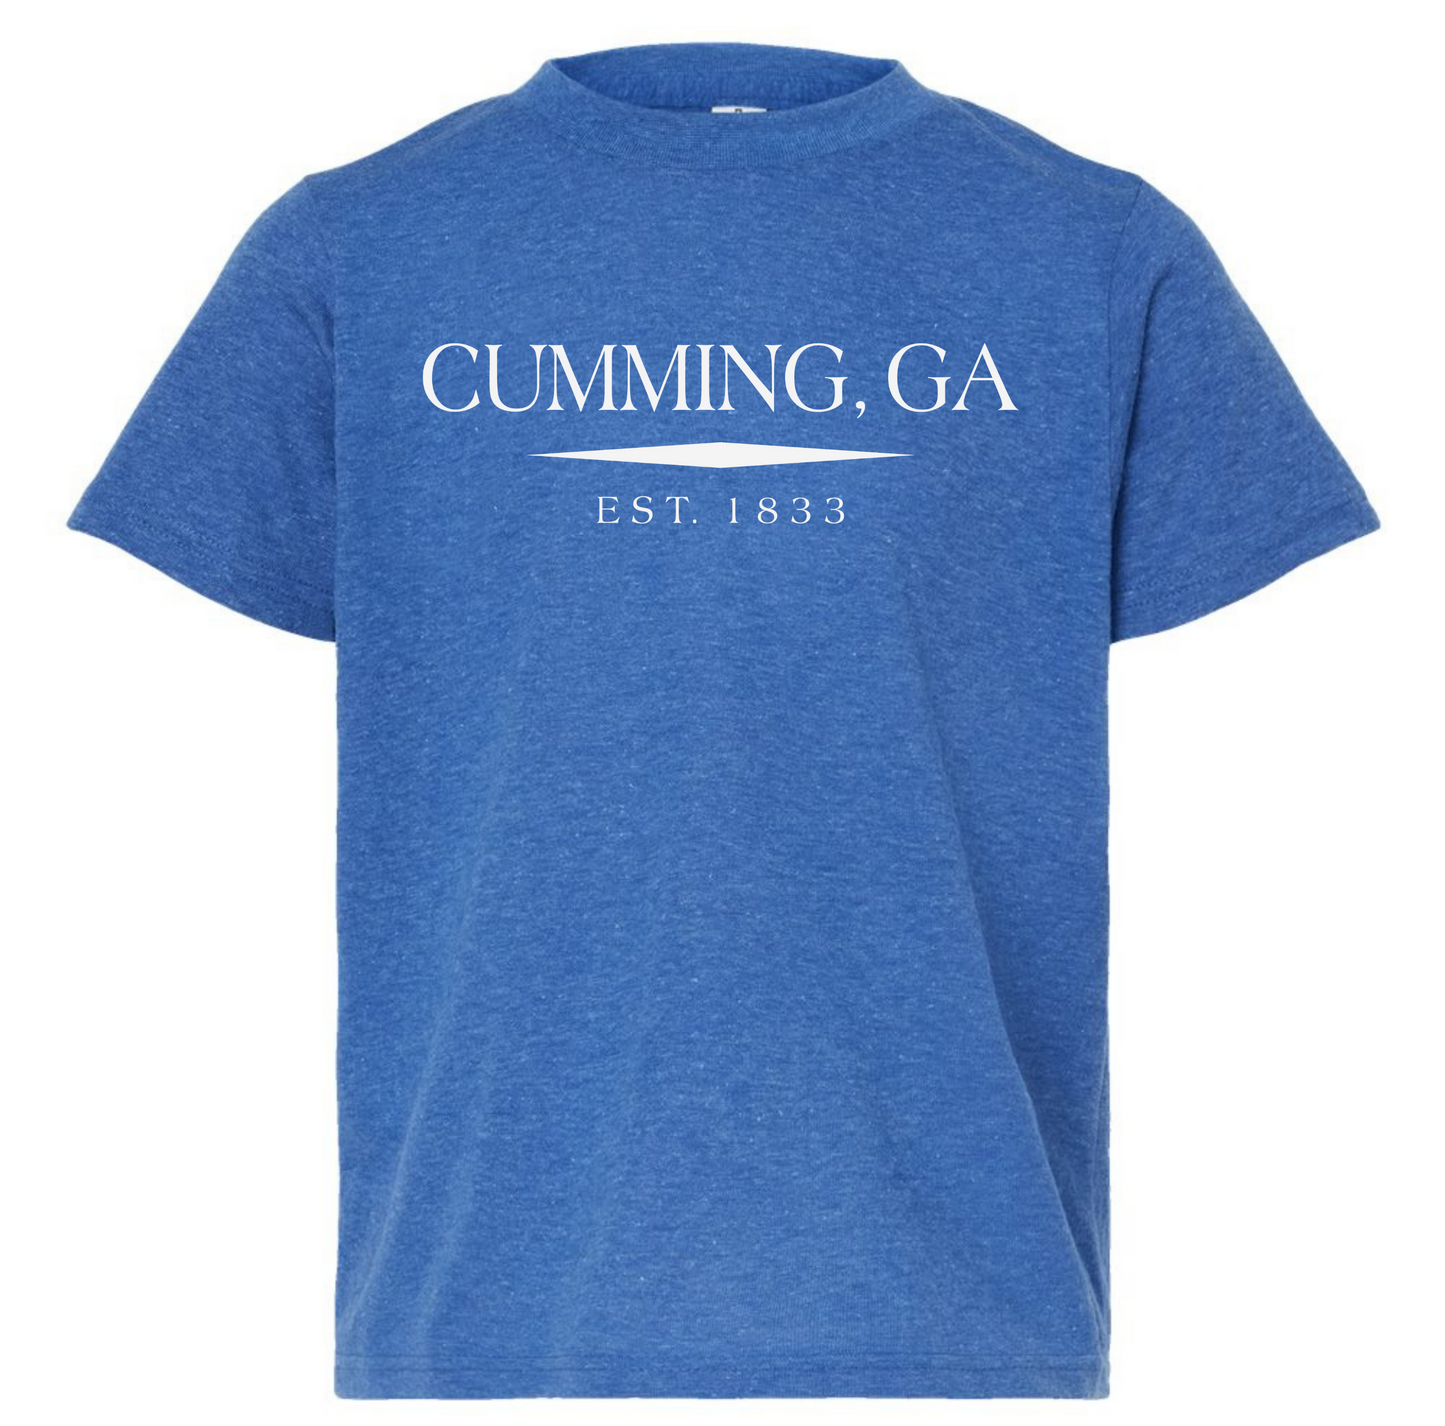 Cumming, GA T-Shirt